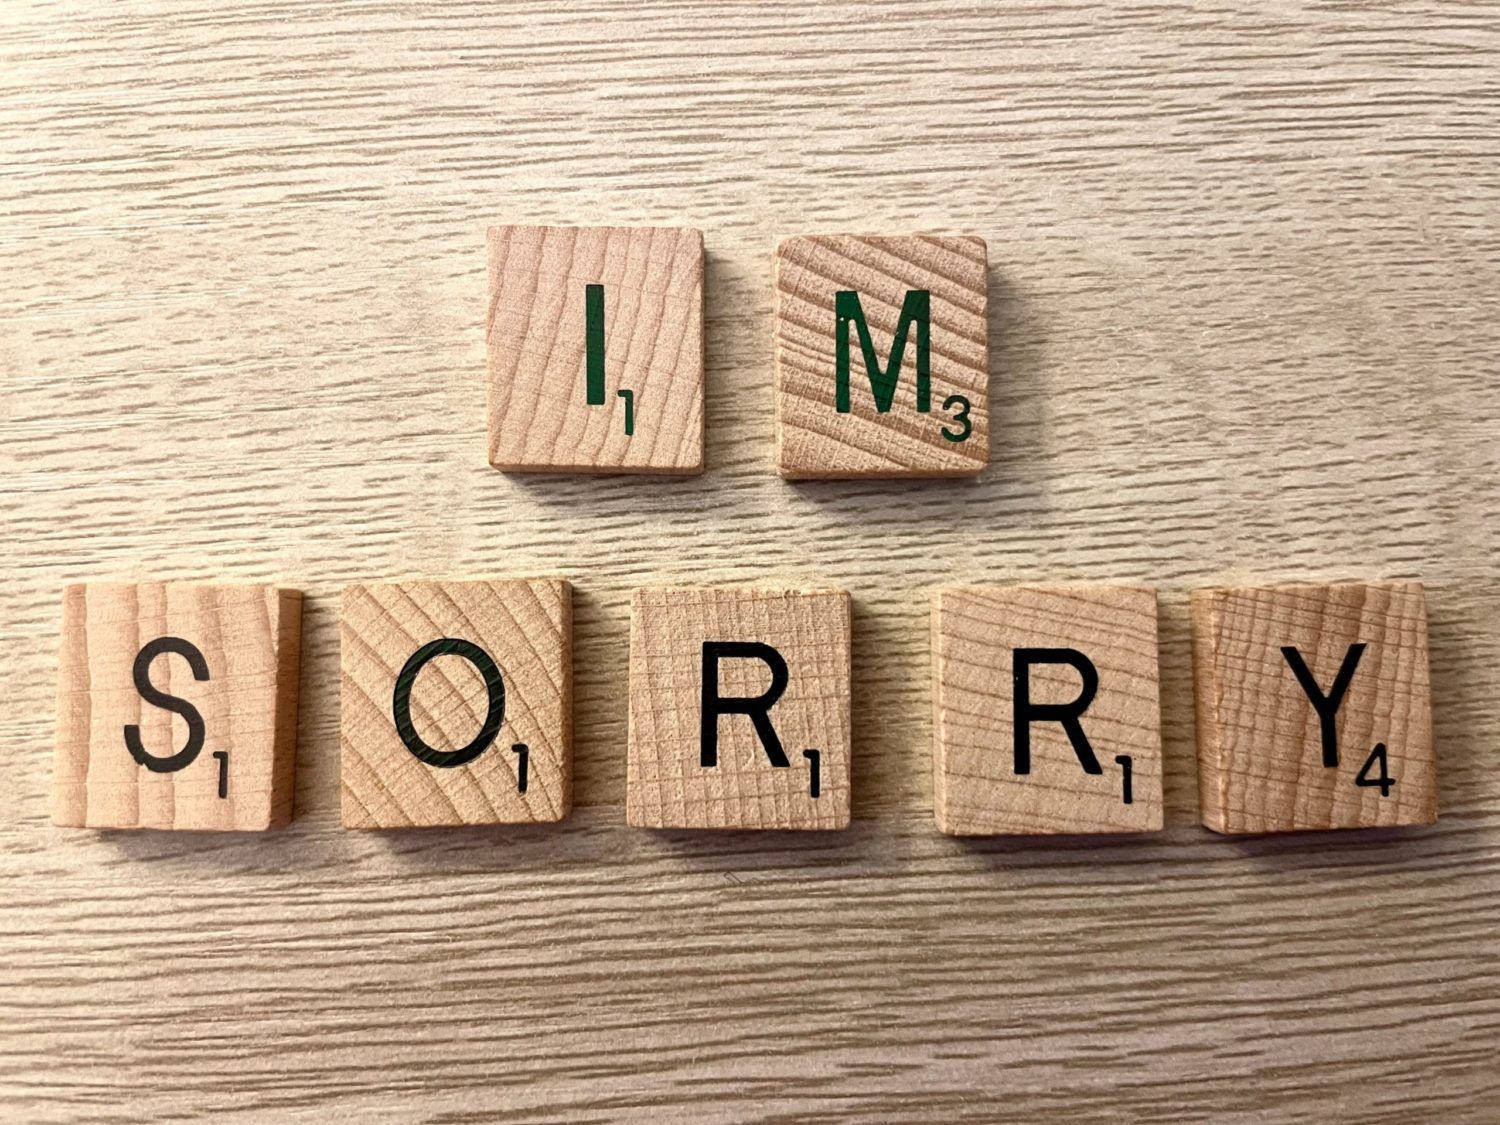 Letter blocks spelling out "I'm Sorry"